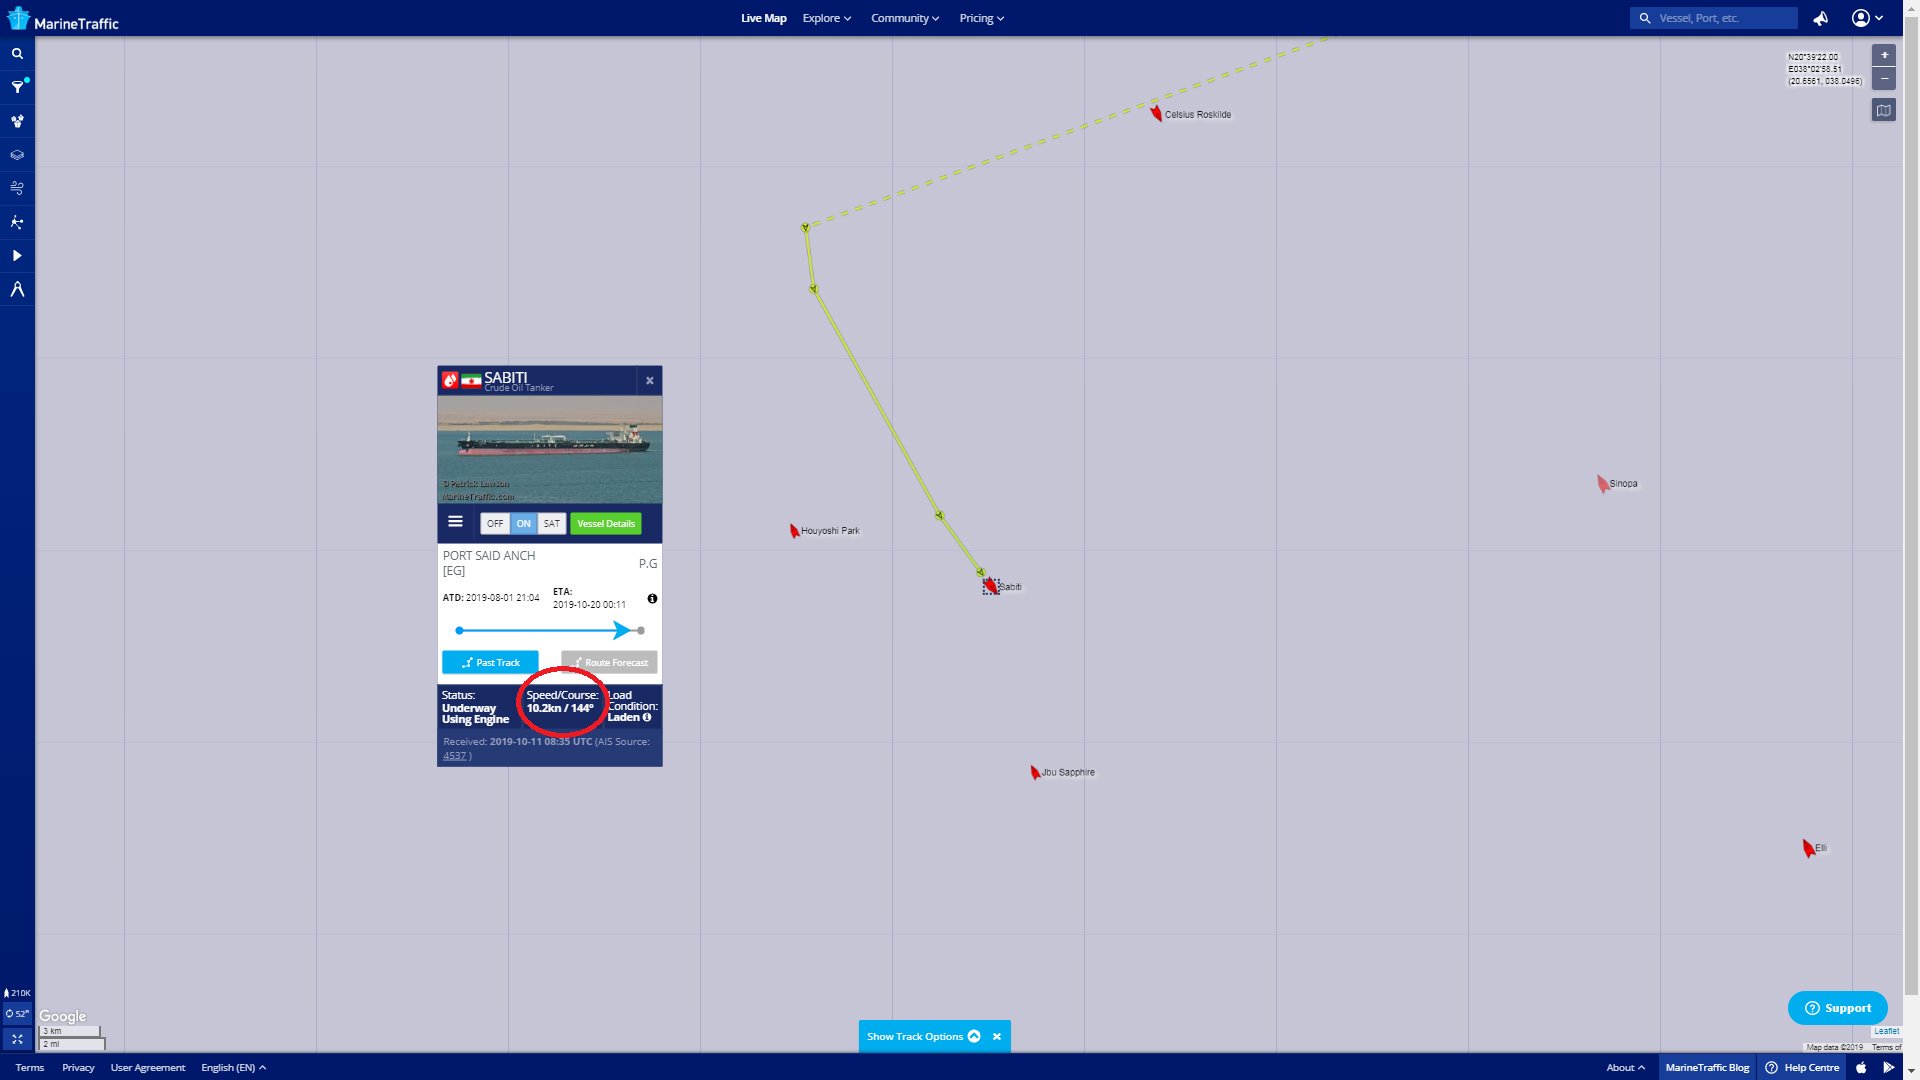 Tankertrackers marine traffic sabiti moving south in Red Sea Gulf Iran missile attacks - Twitter.jpeg